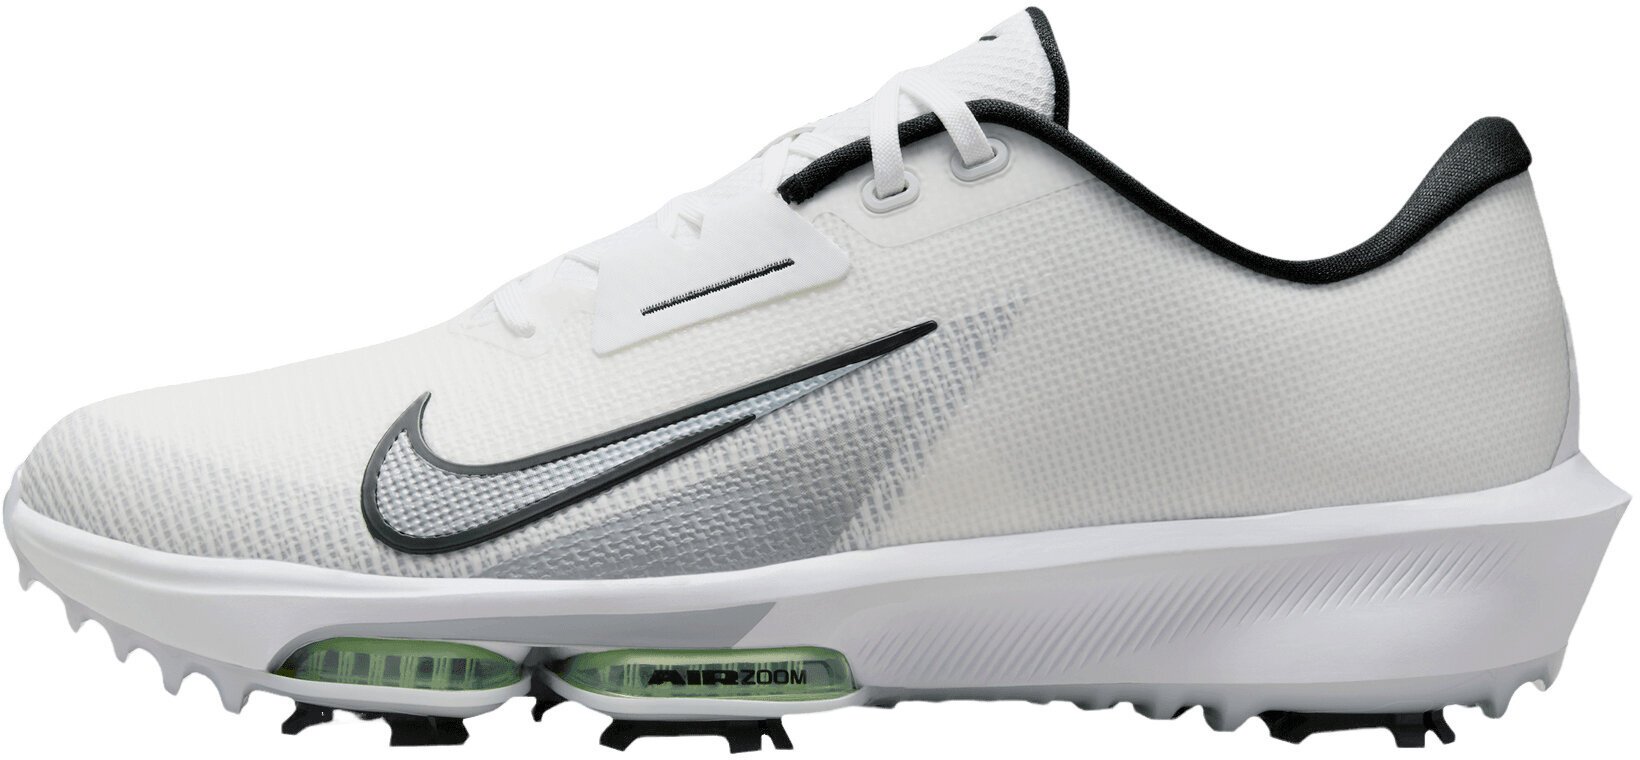 Nike Air Zoom Infinity Tour Next 2 Unisex Golf Shoes White/Black/Vapor Green/Pure Platinum 45,5